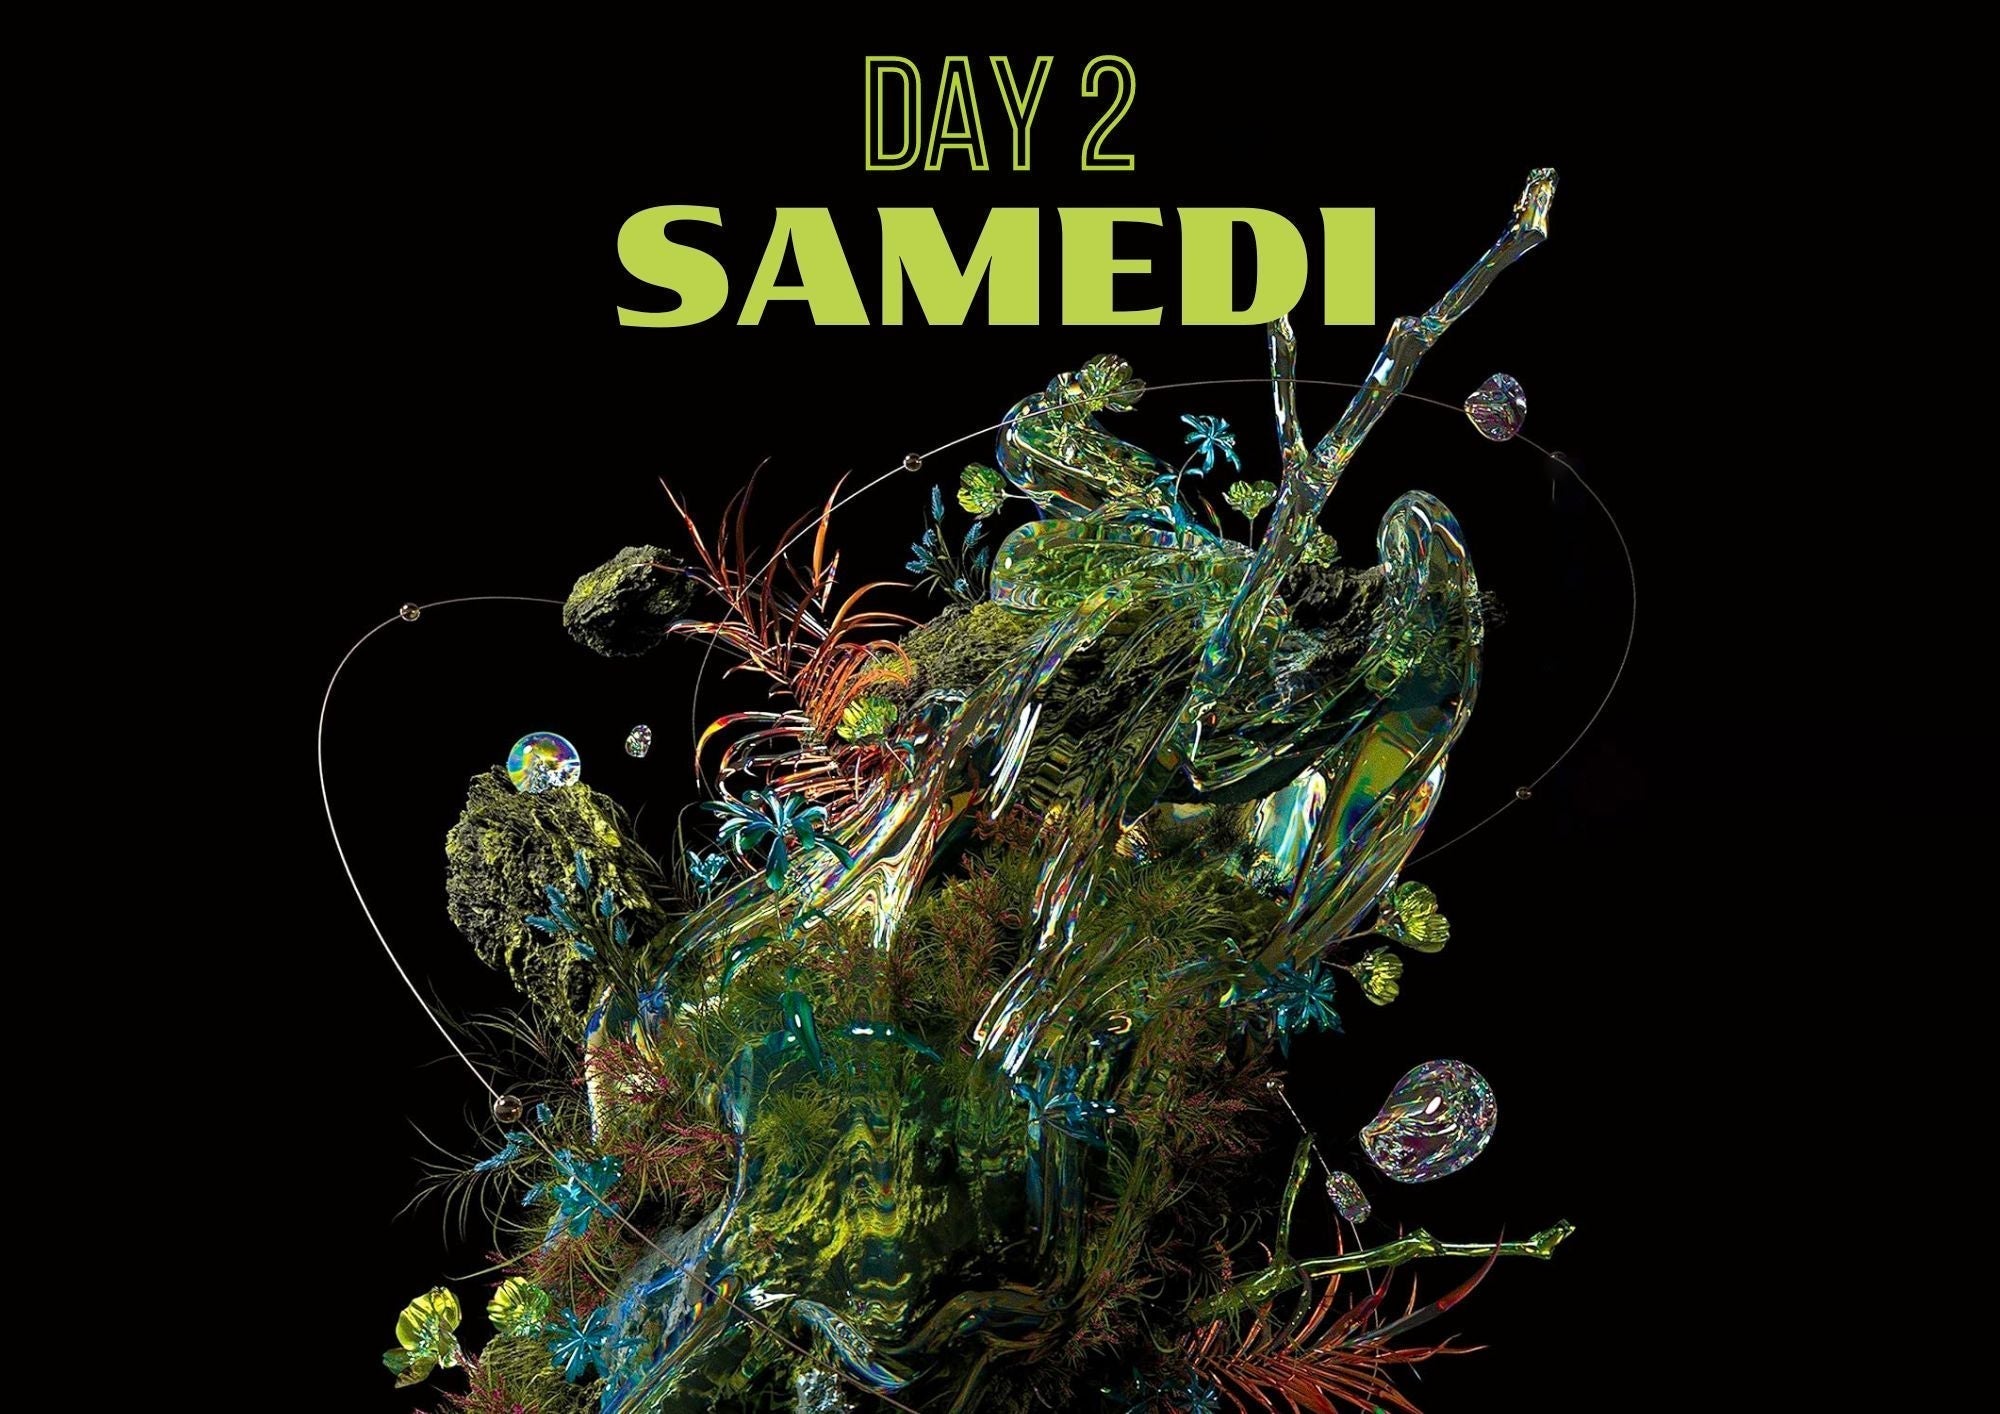 SAMEDI 11 NOV : HORAIRE 17H - 18H